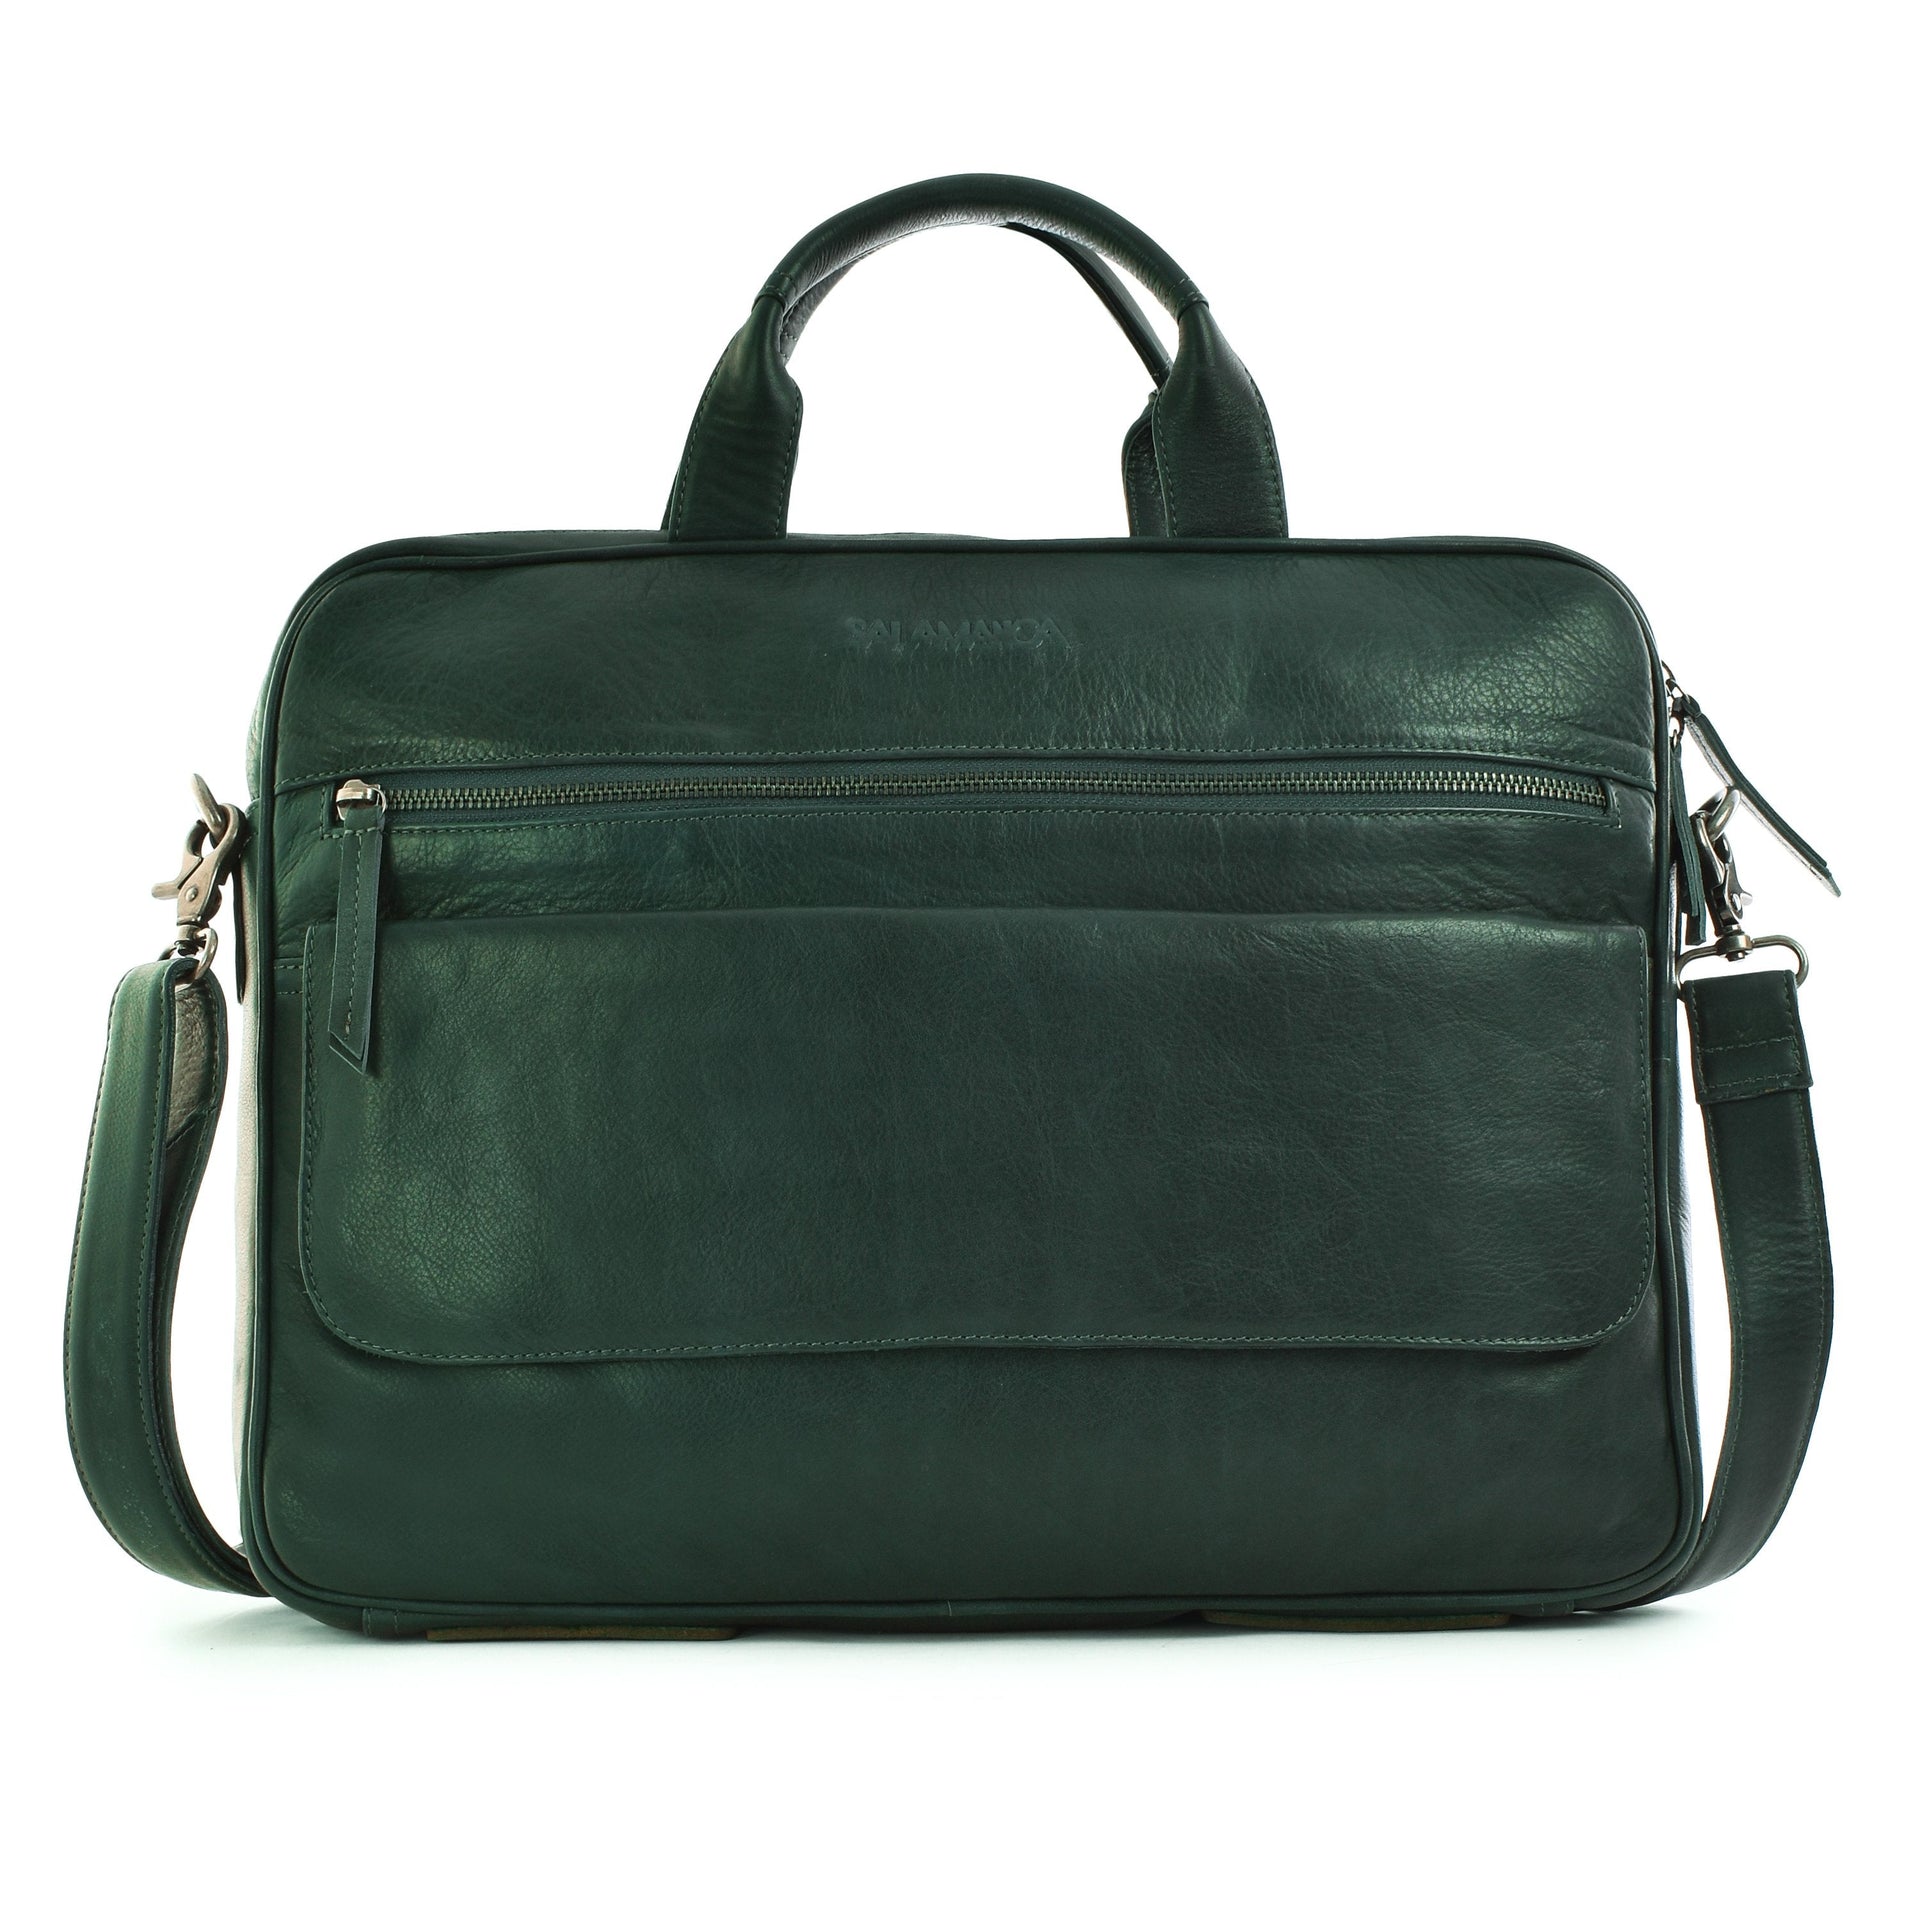 StrapIt Business Bag - Ponderosa Pine - Laptop Bags